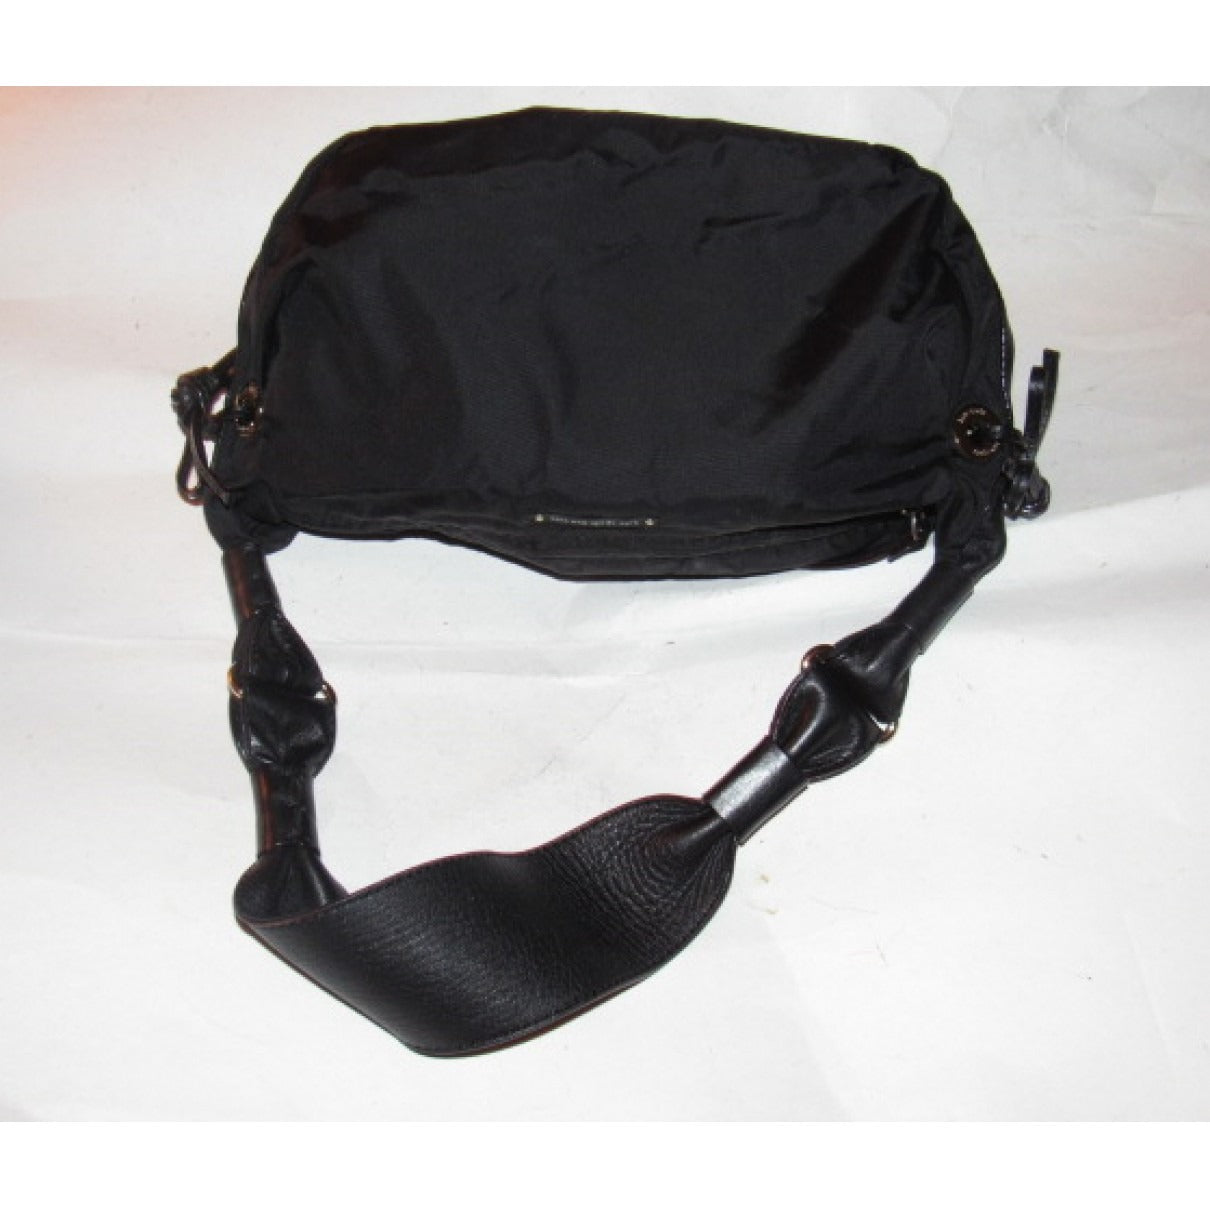 Kate Spade black leather hobo purse w chrome accents